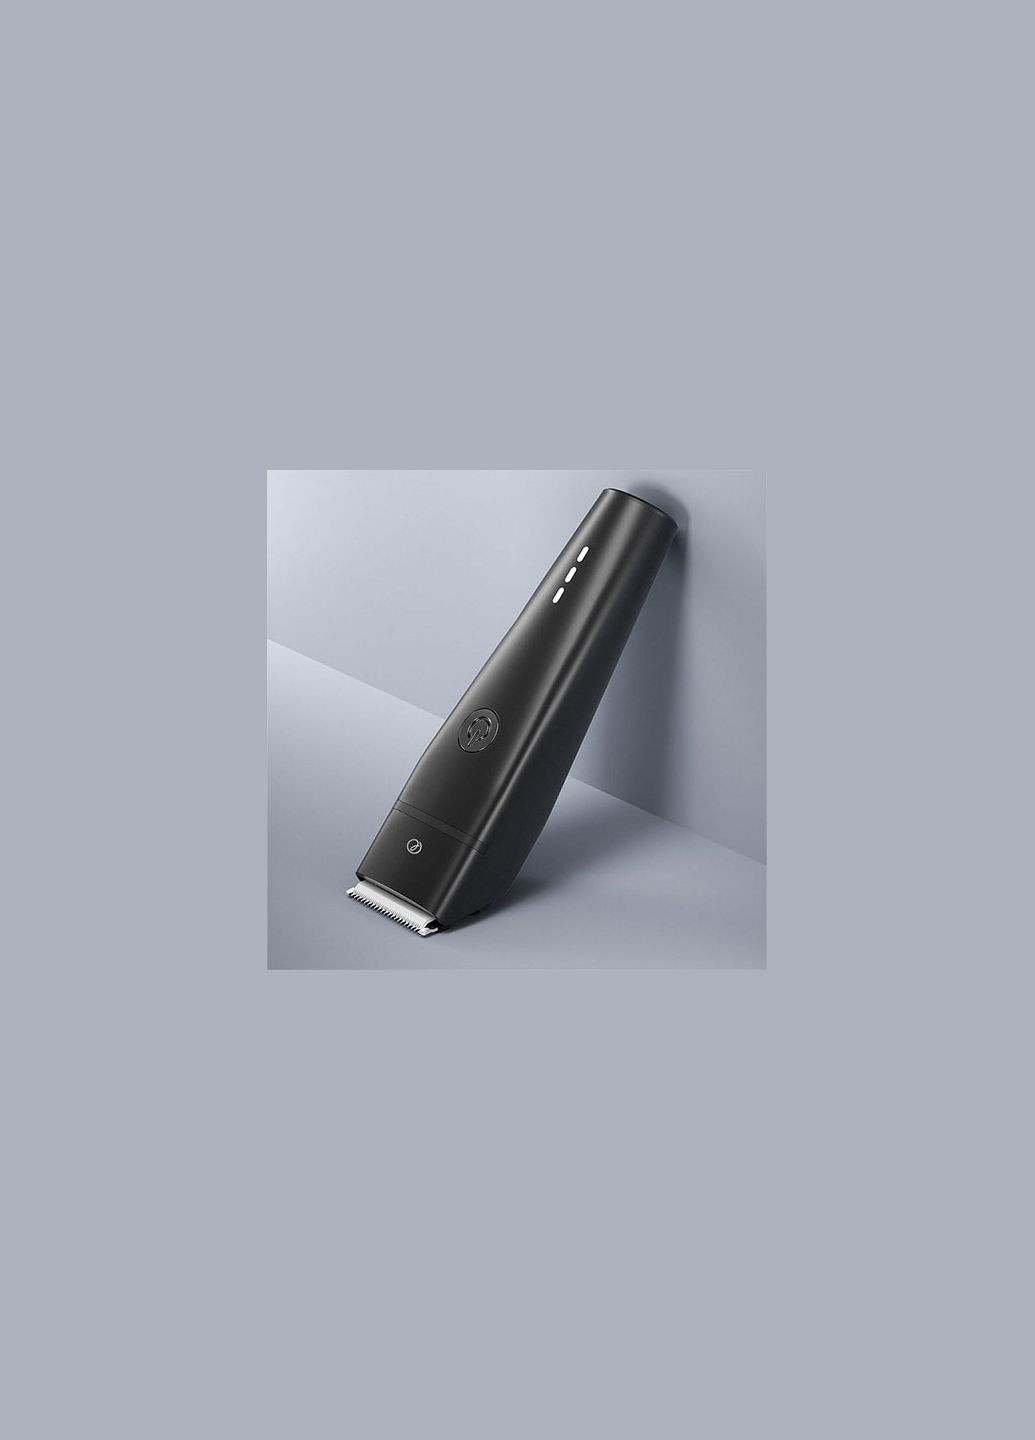 Машинка для стрижки волос Xiaomi Boost 2 White Enchen (268225599)